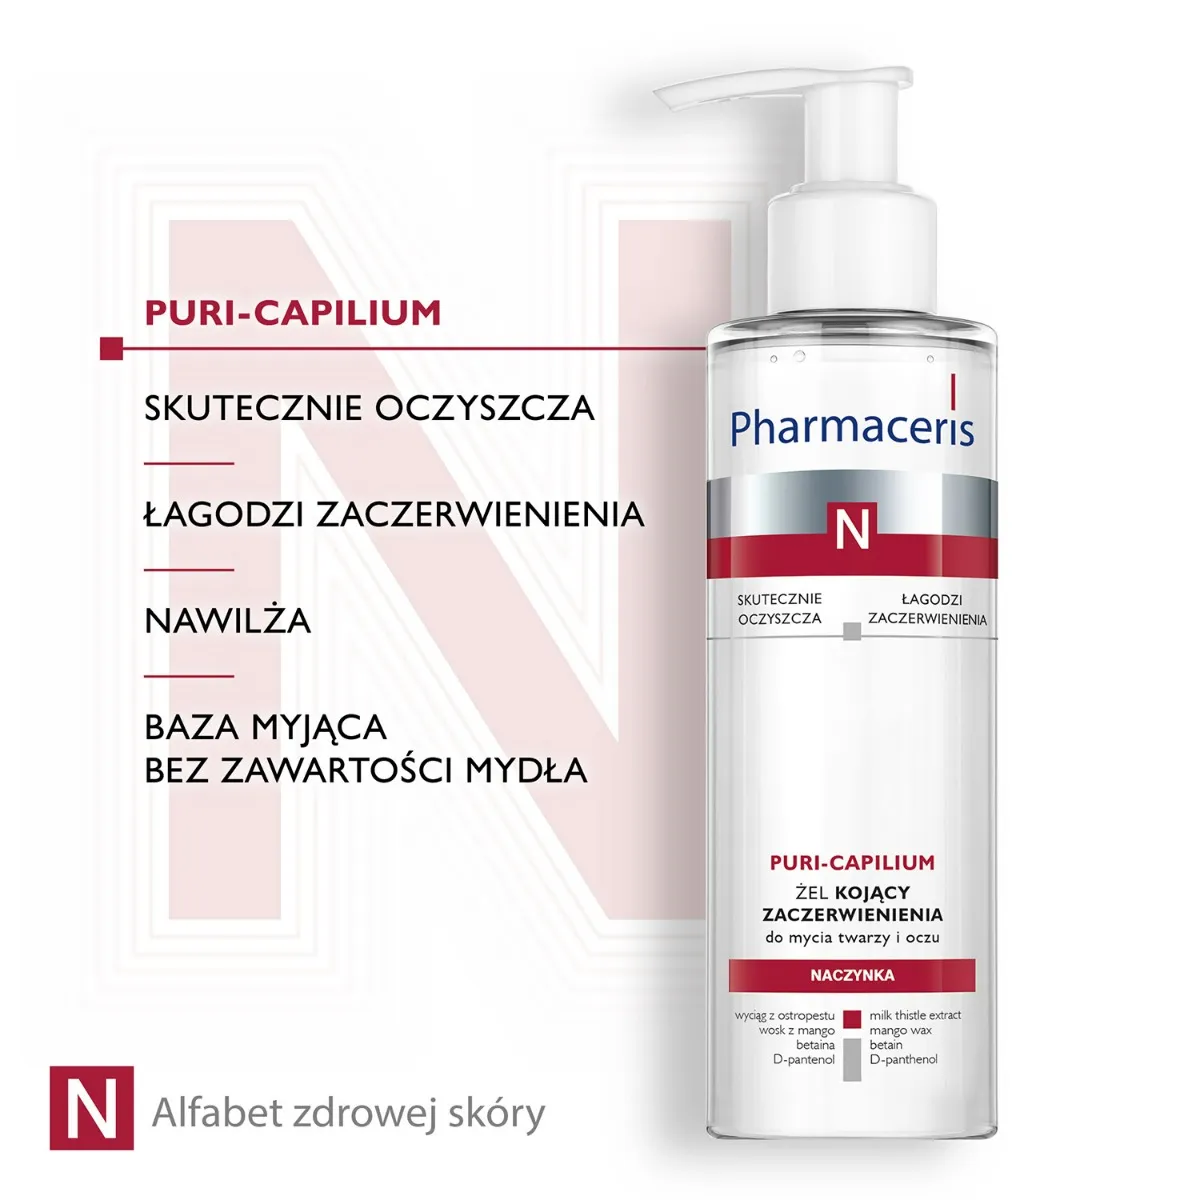 Pharmaceris N Puri-Capilium żel myjący, 190 ml 